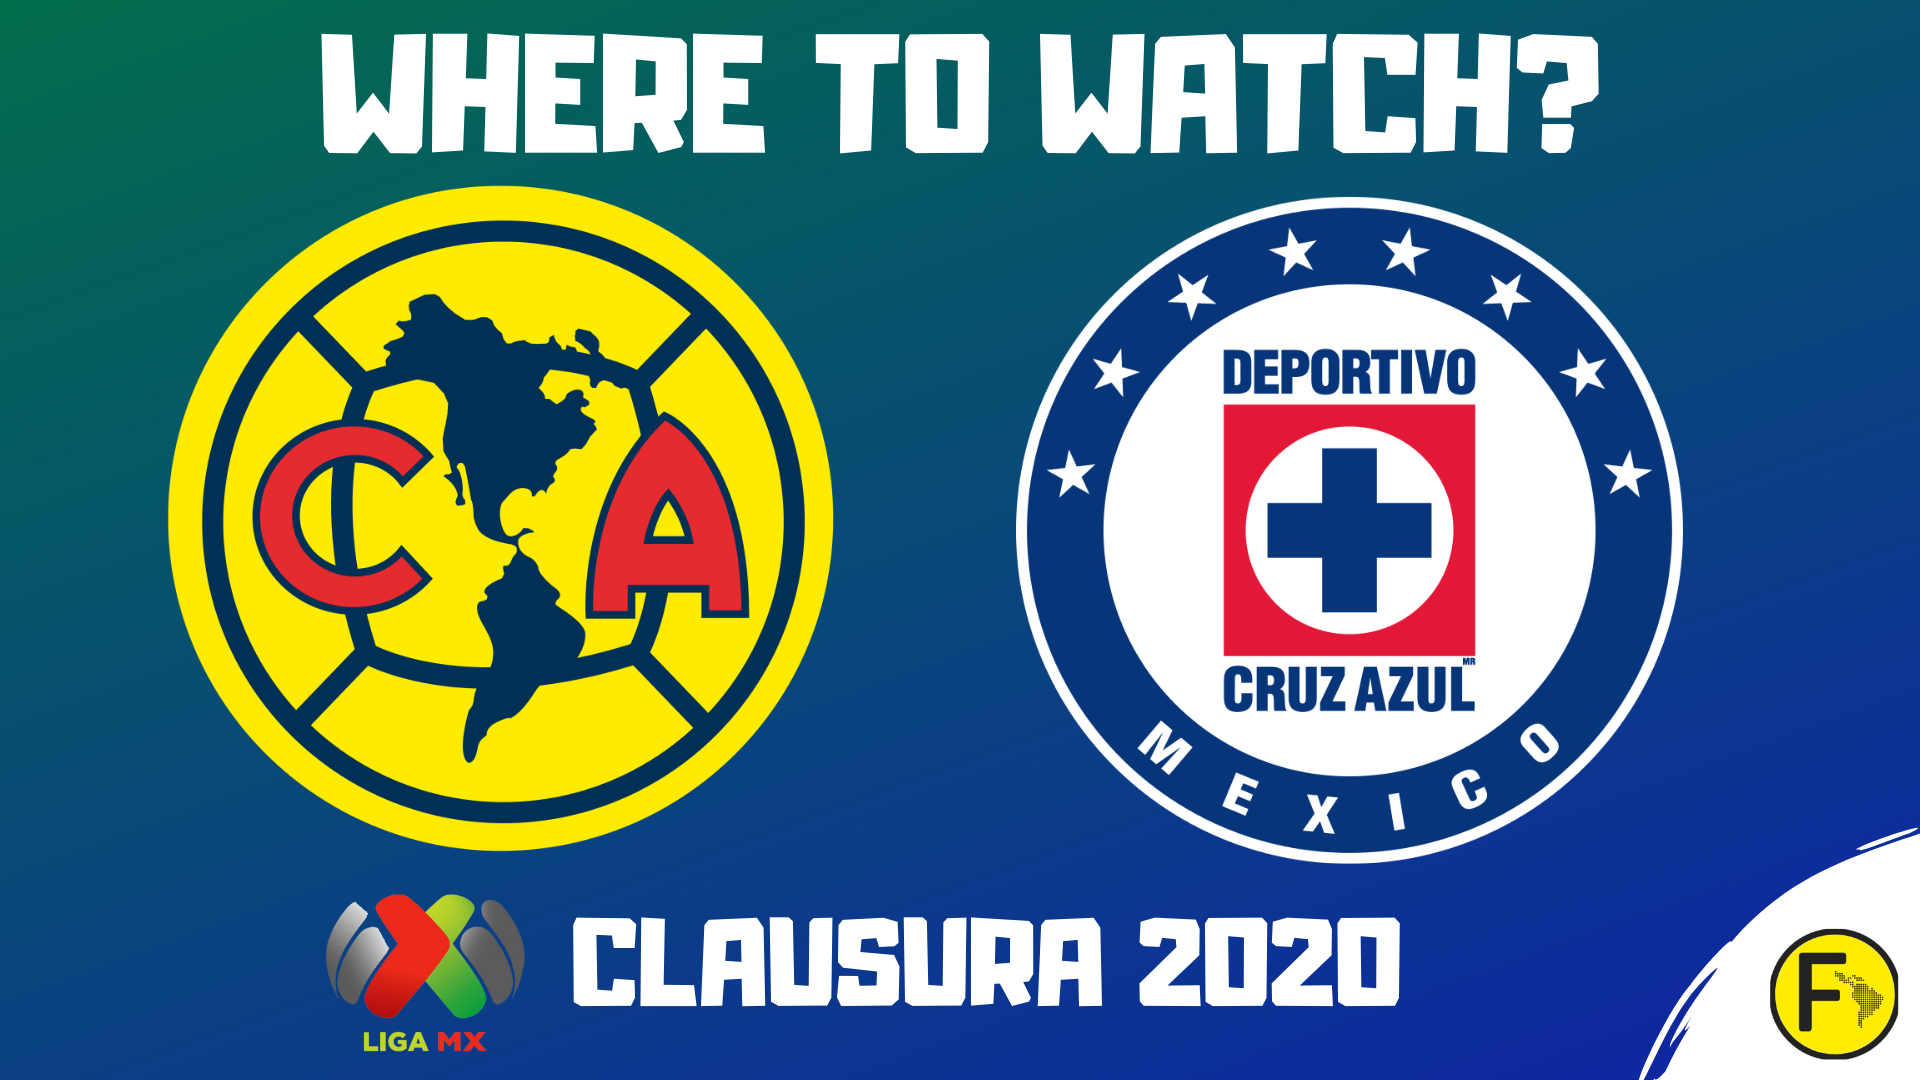 Clasico Joven Club America Vs Cruz Azul How To Watch Live Online